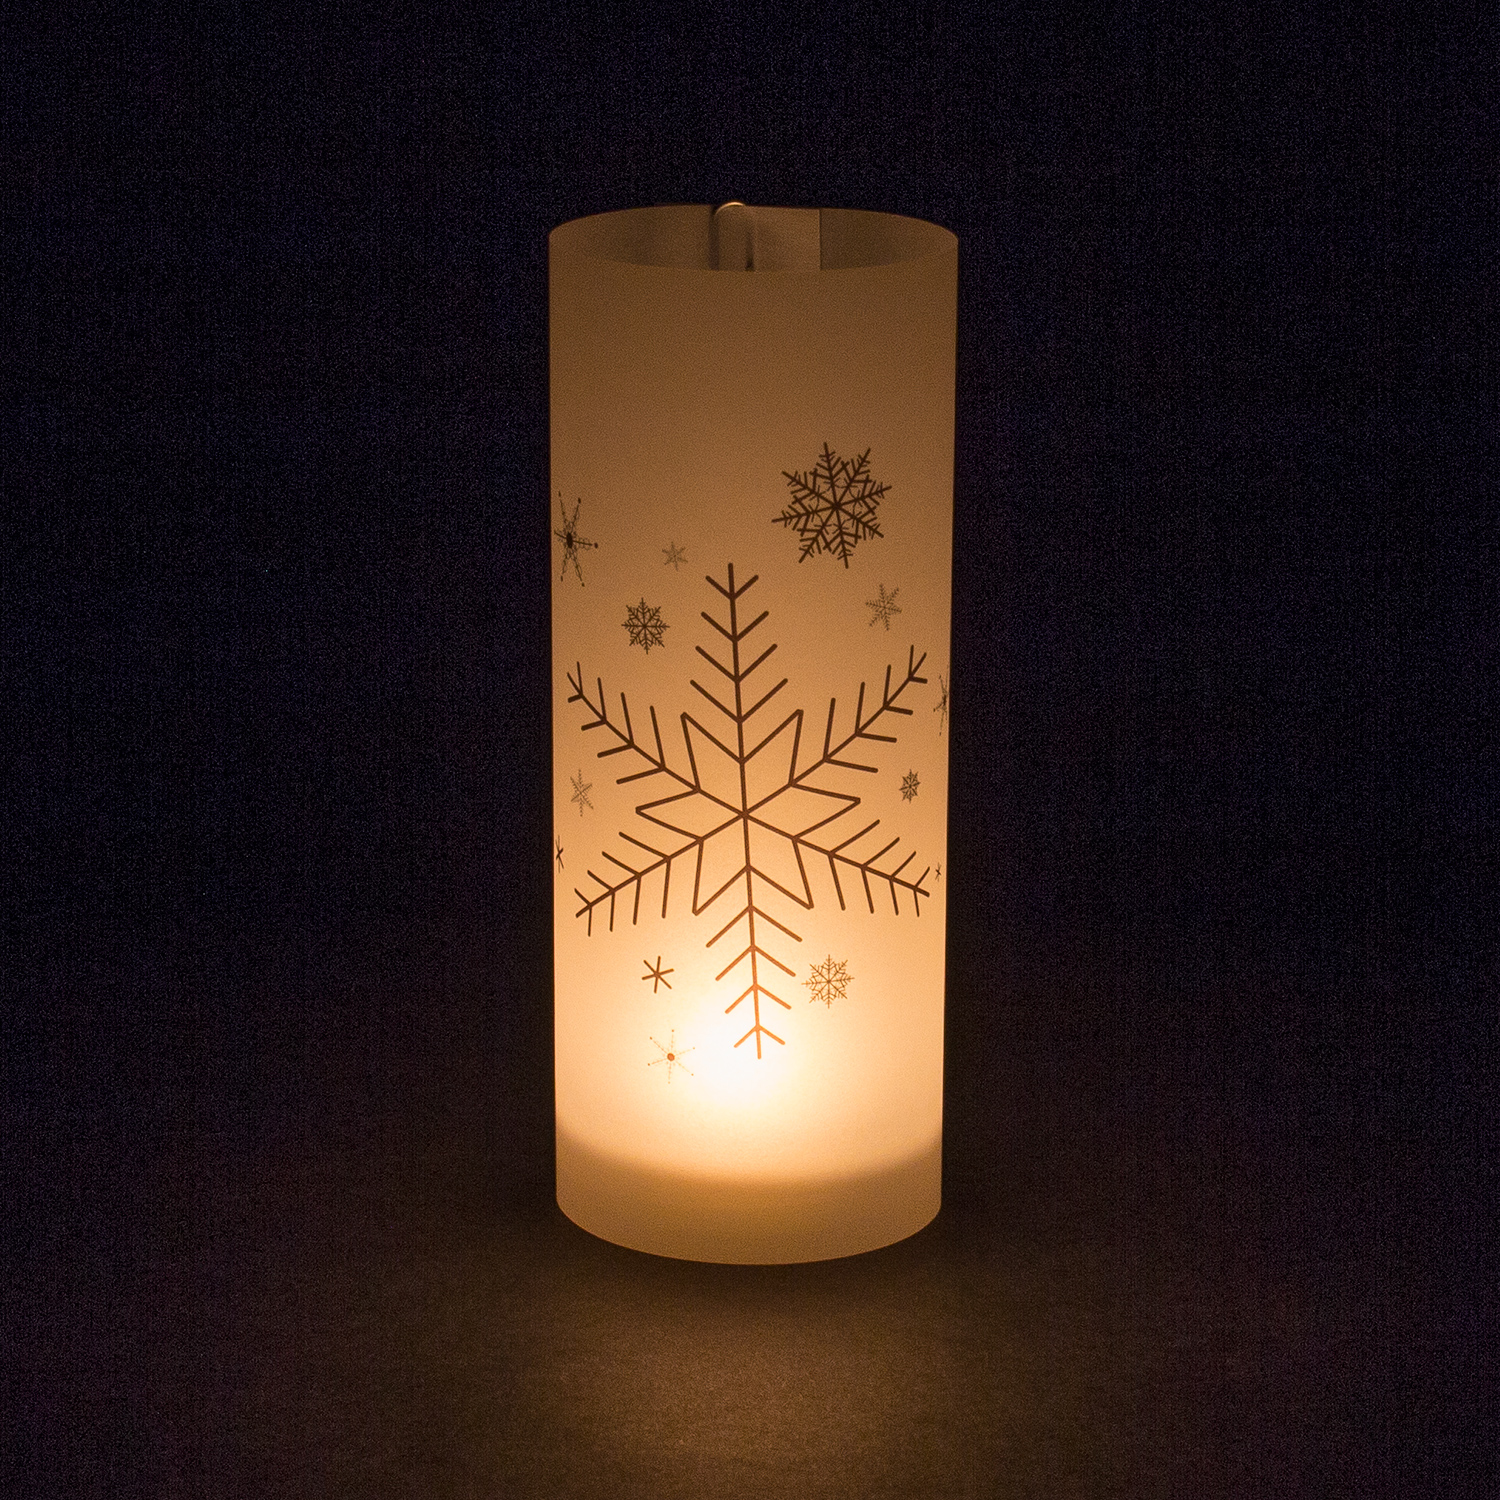 Paper Light Shade "Weihnachten" - The Special One